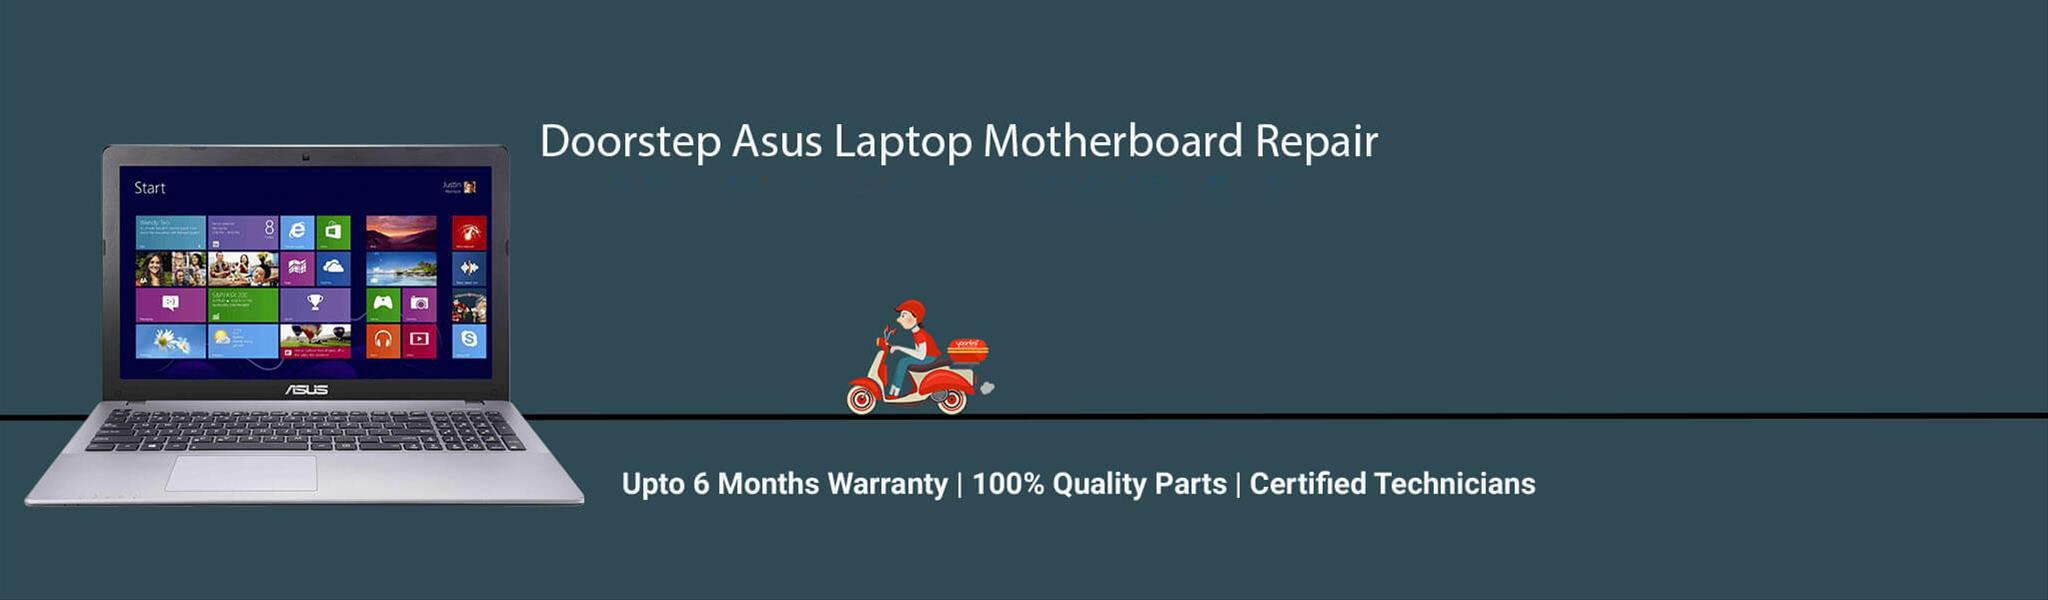 asus-laptop-motherboard-repair.jpg